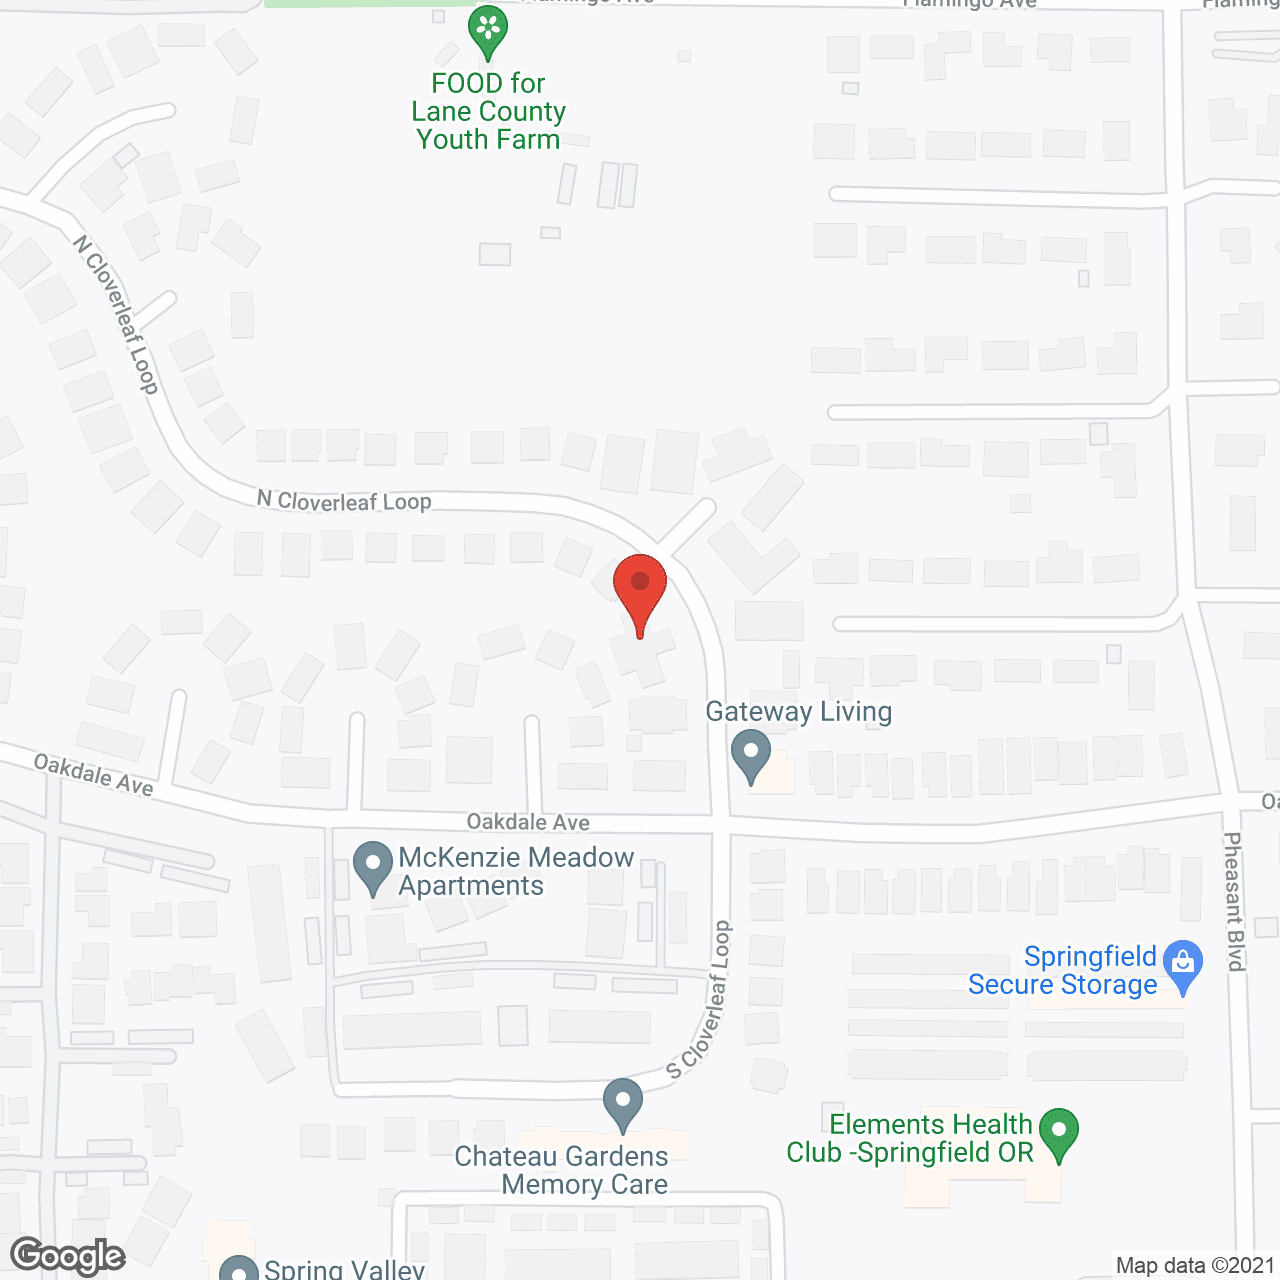 Gateway Living Center in google map